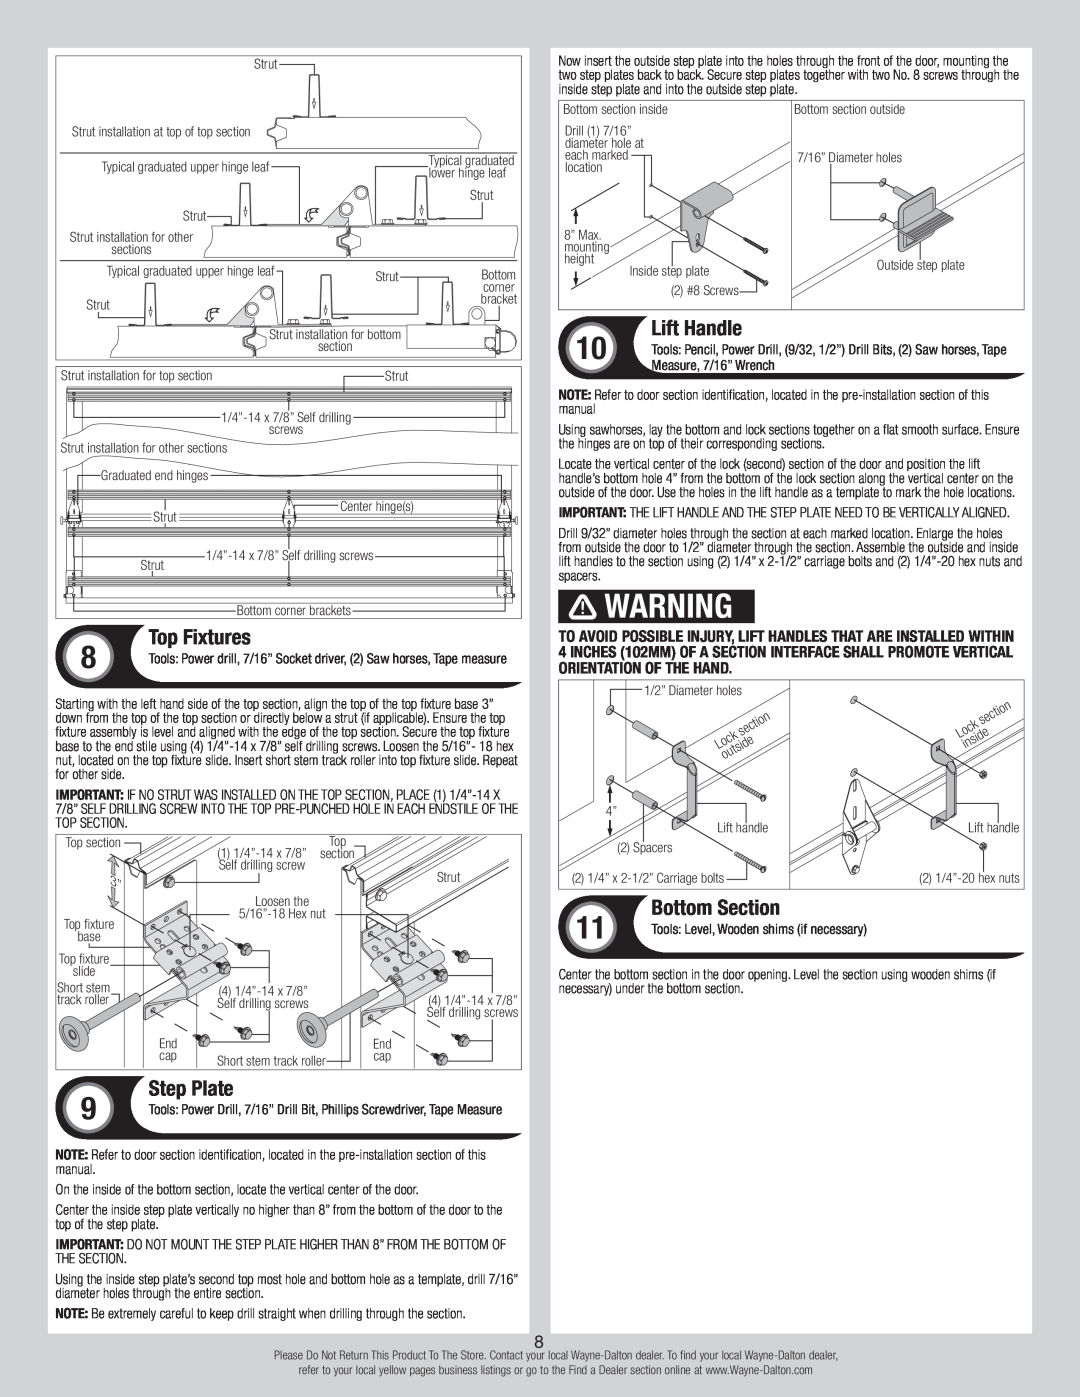 Wayne-Dalton 8700 installation instructions Top Fixtures, Step Plate, Lift Handle, Bottom Section 